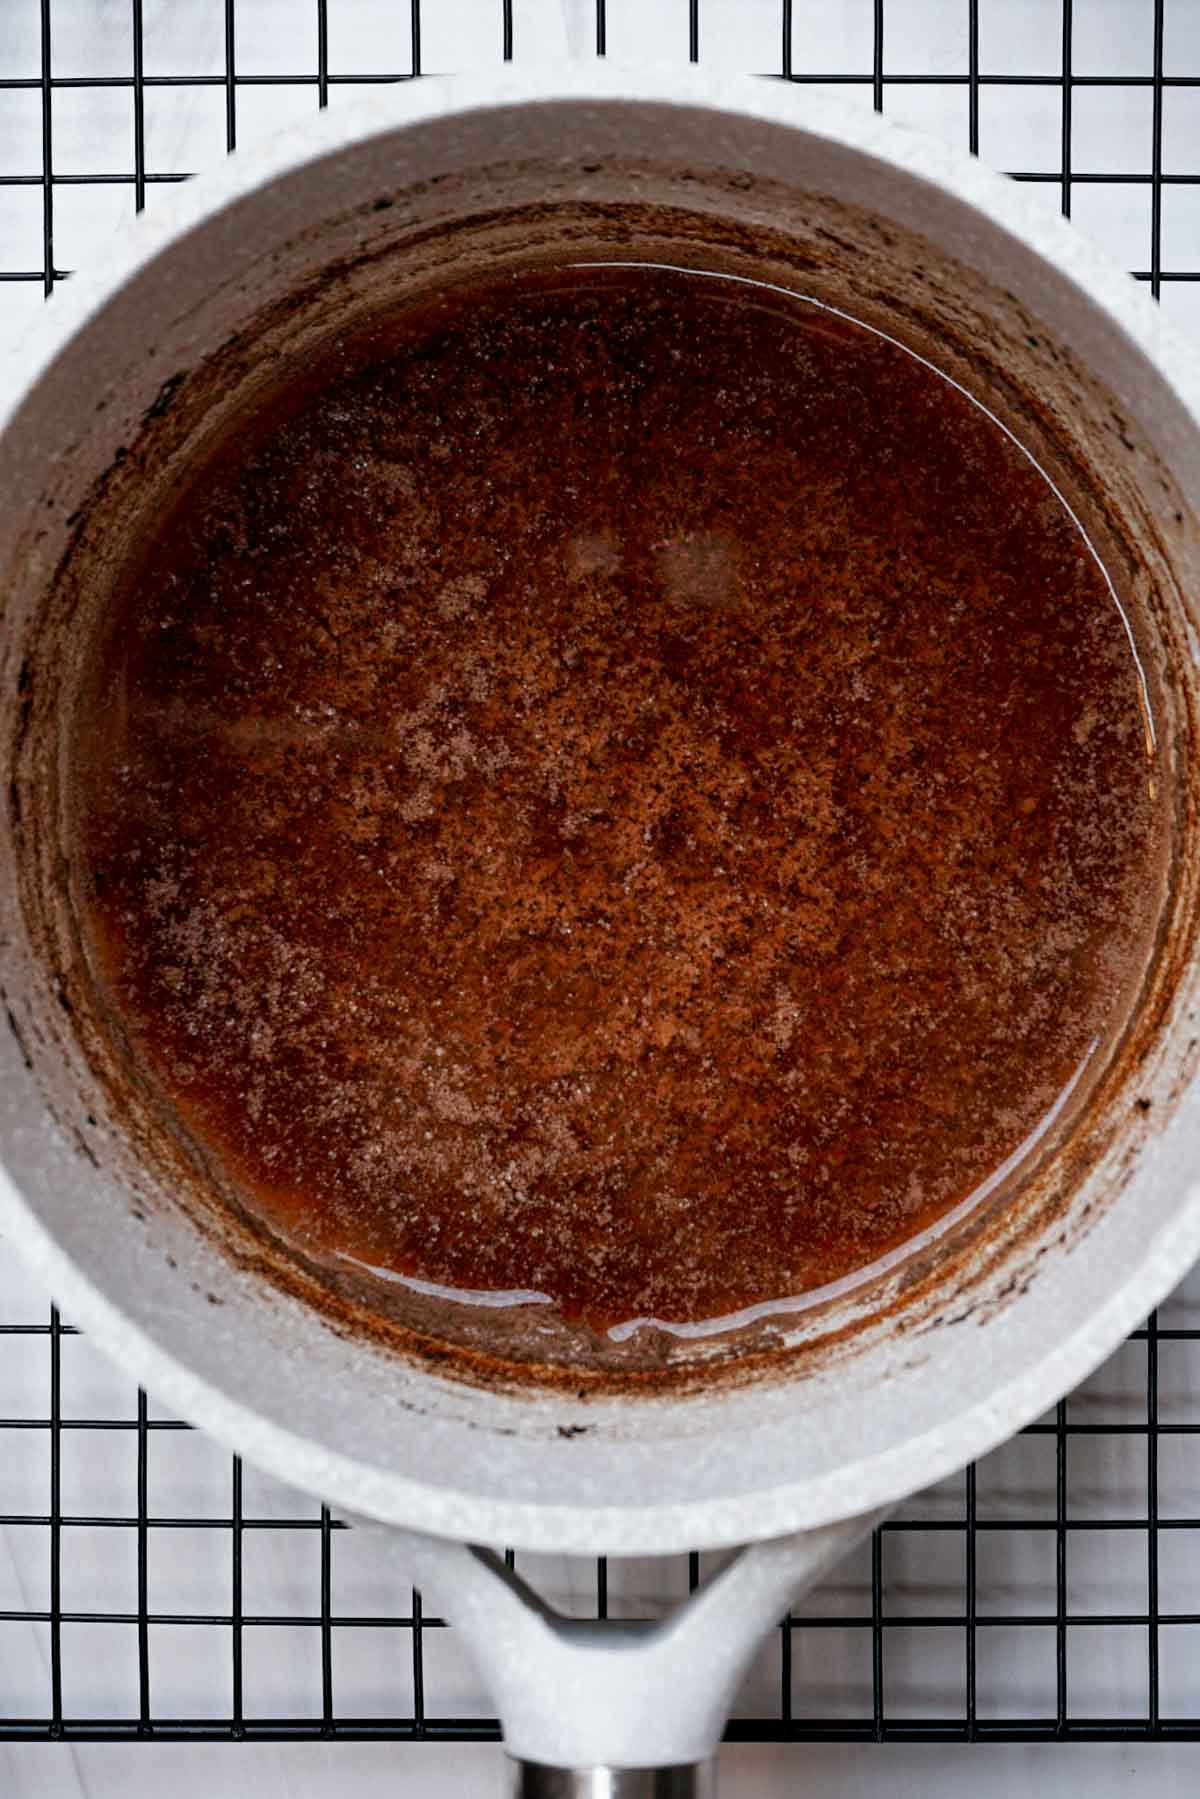 a dish of brown liquid